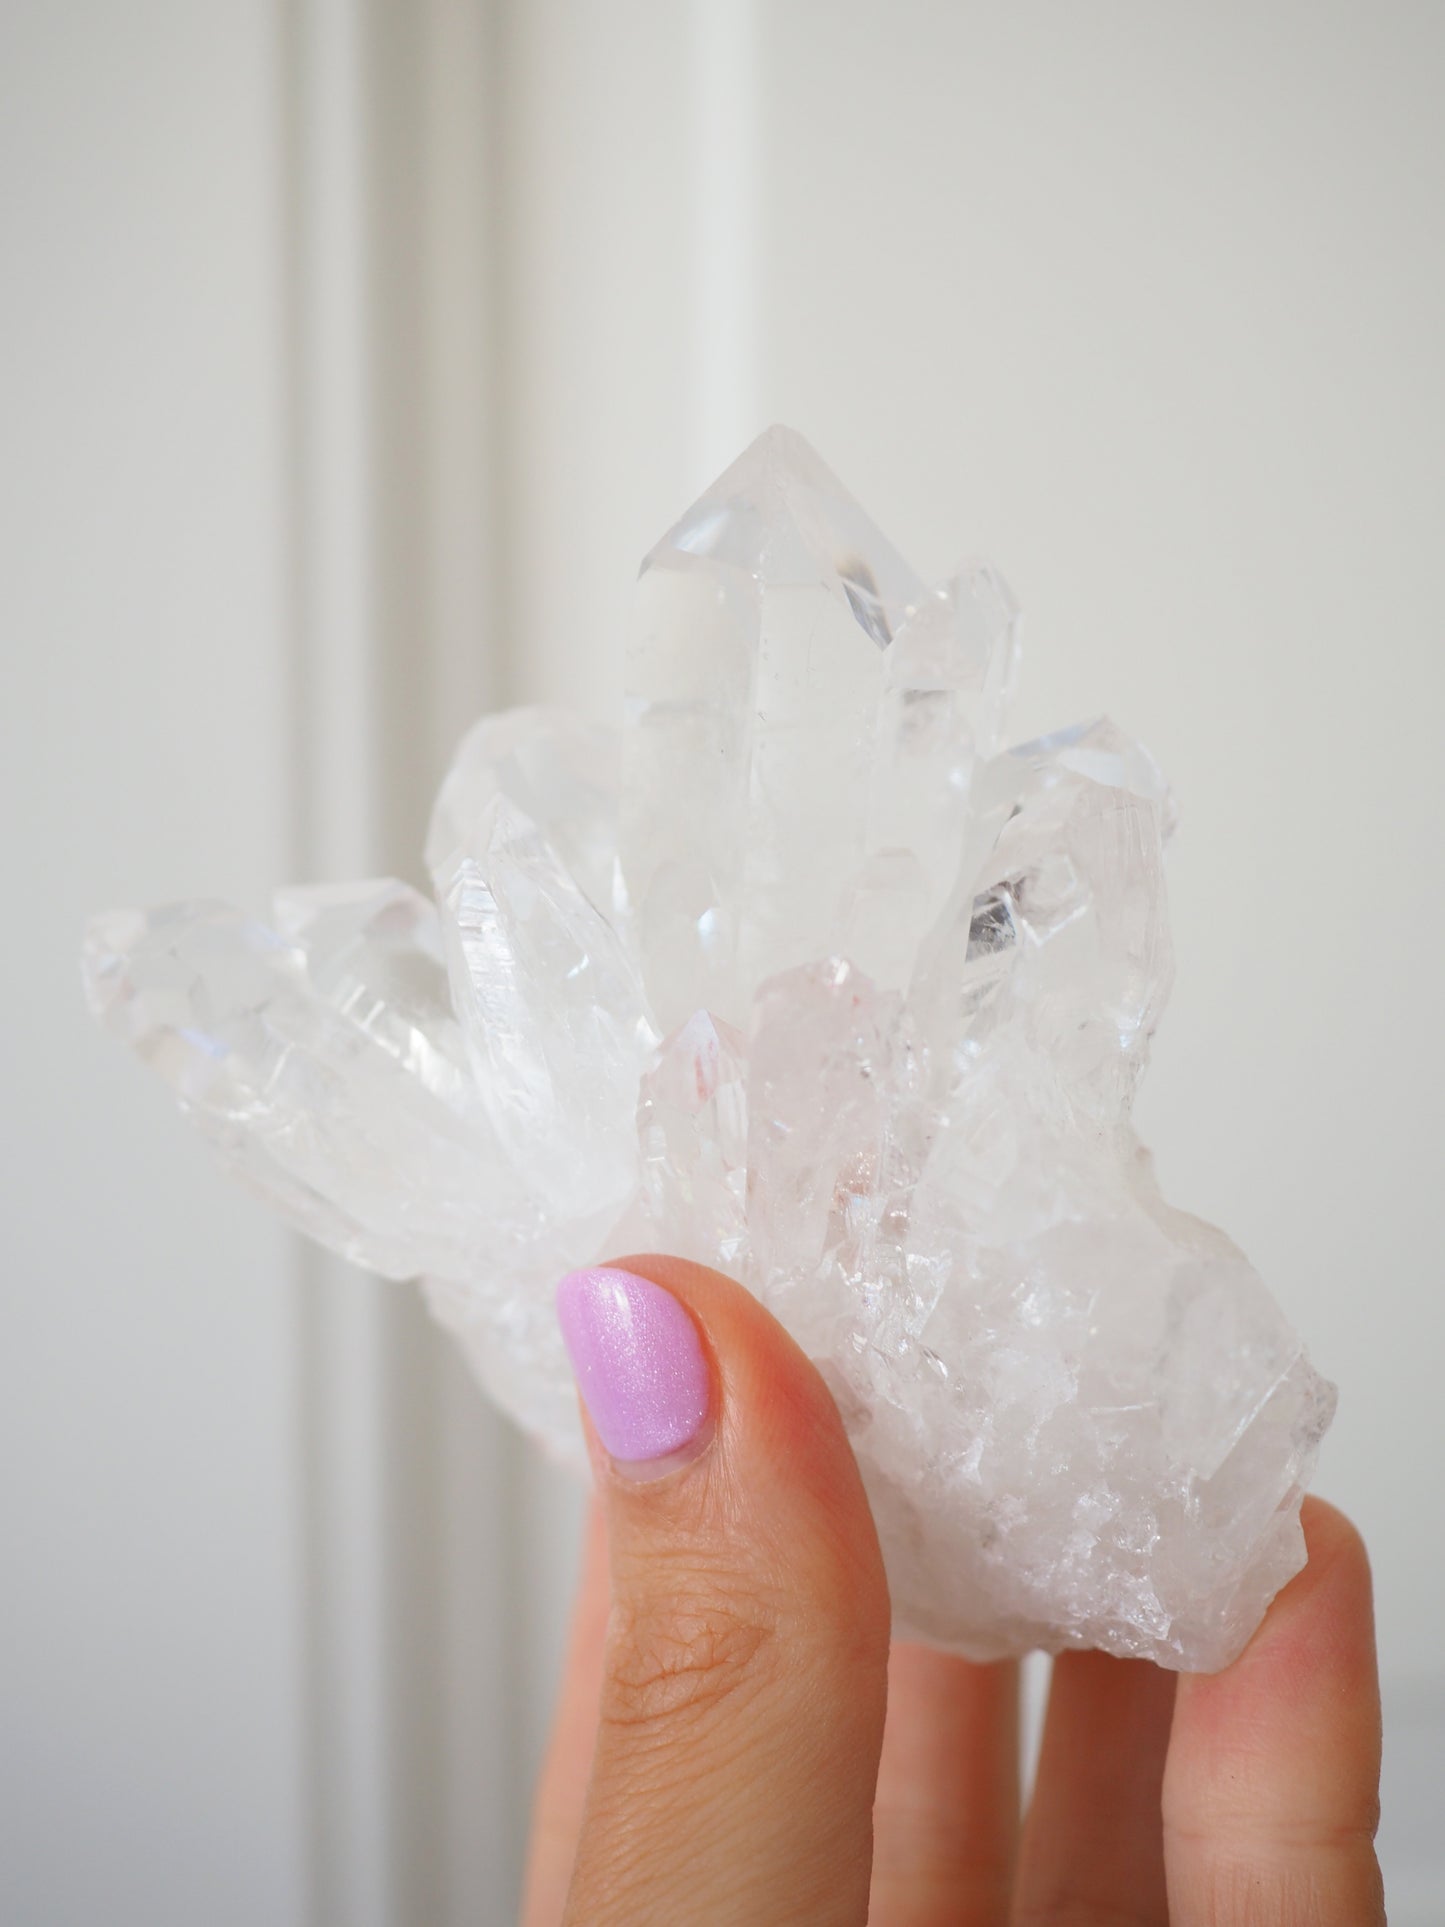 Bergkristall Cluster ca 9cm [6] - aus Minas Gerais Brasilien HIGH QUALITY